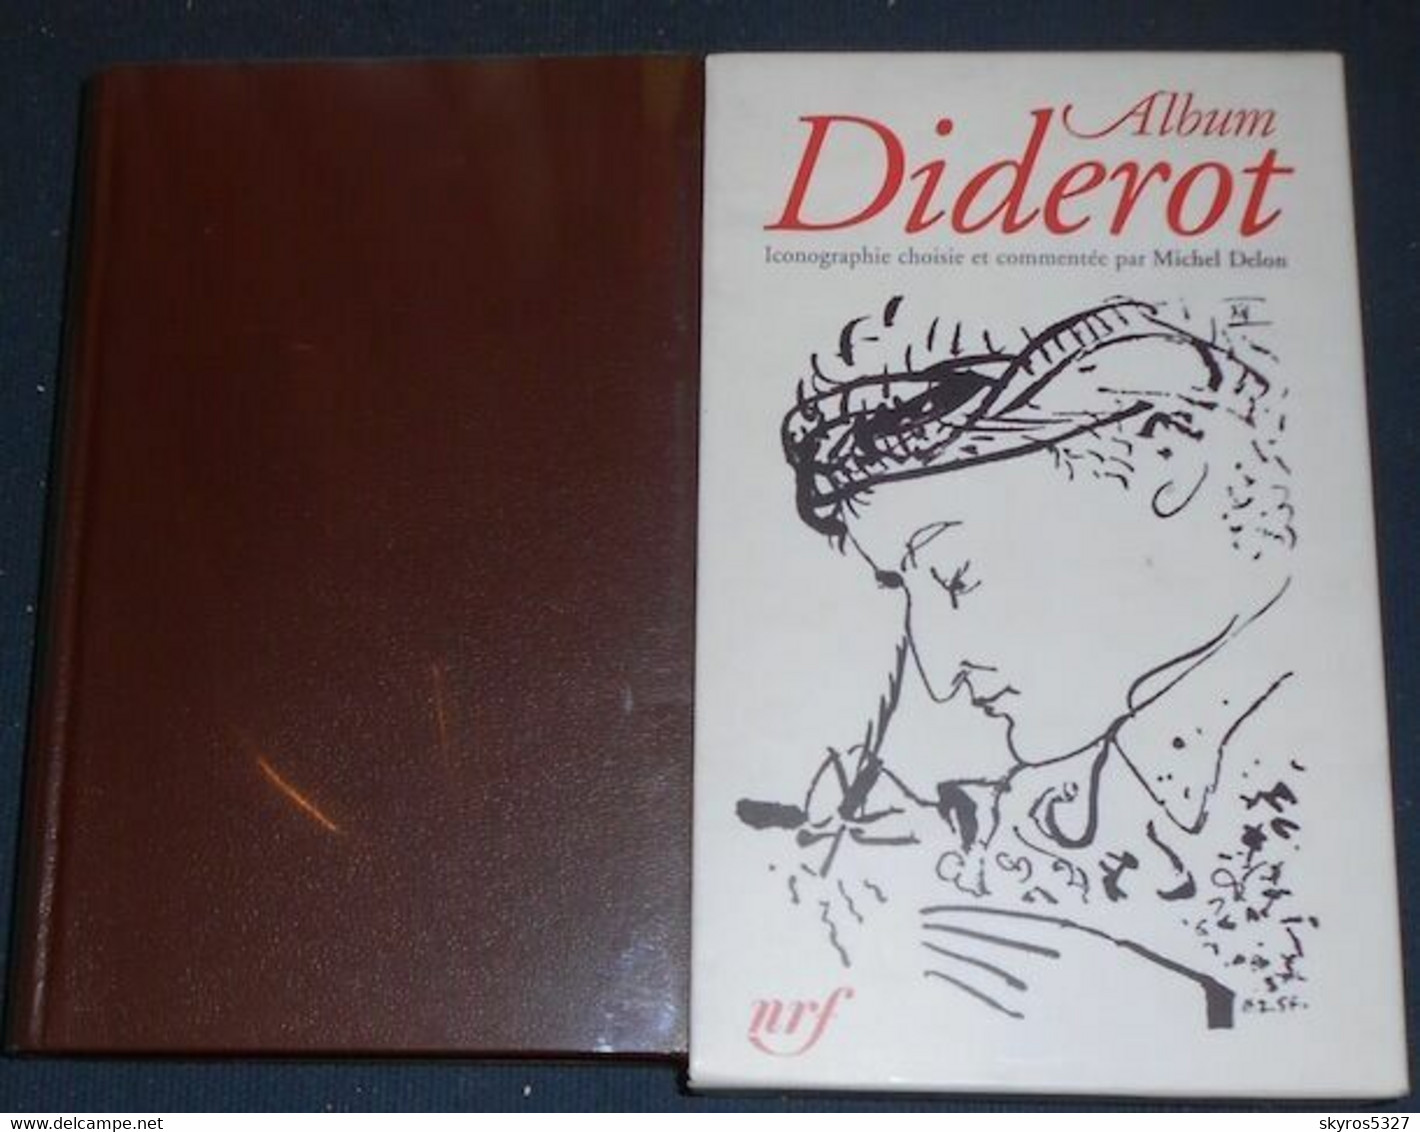 Album Diderot - La Pleyade